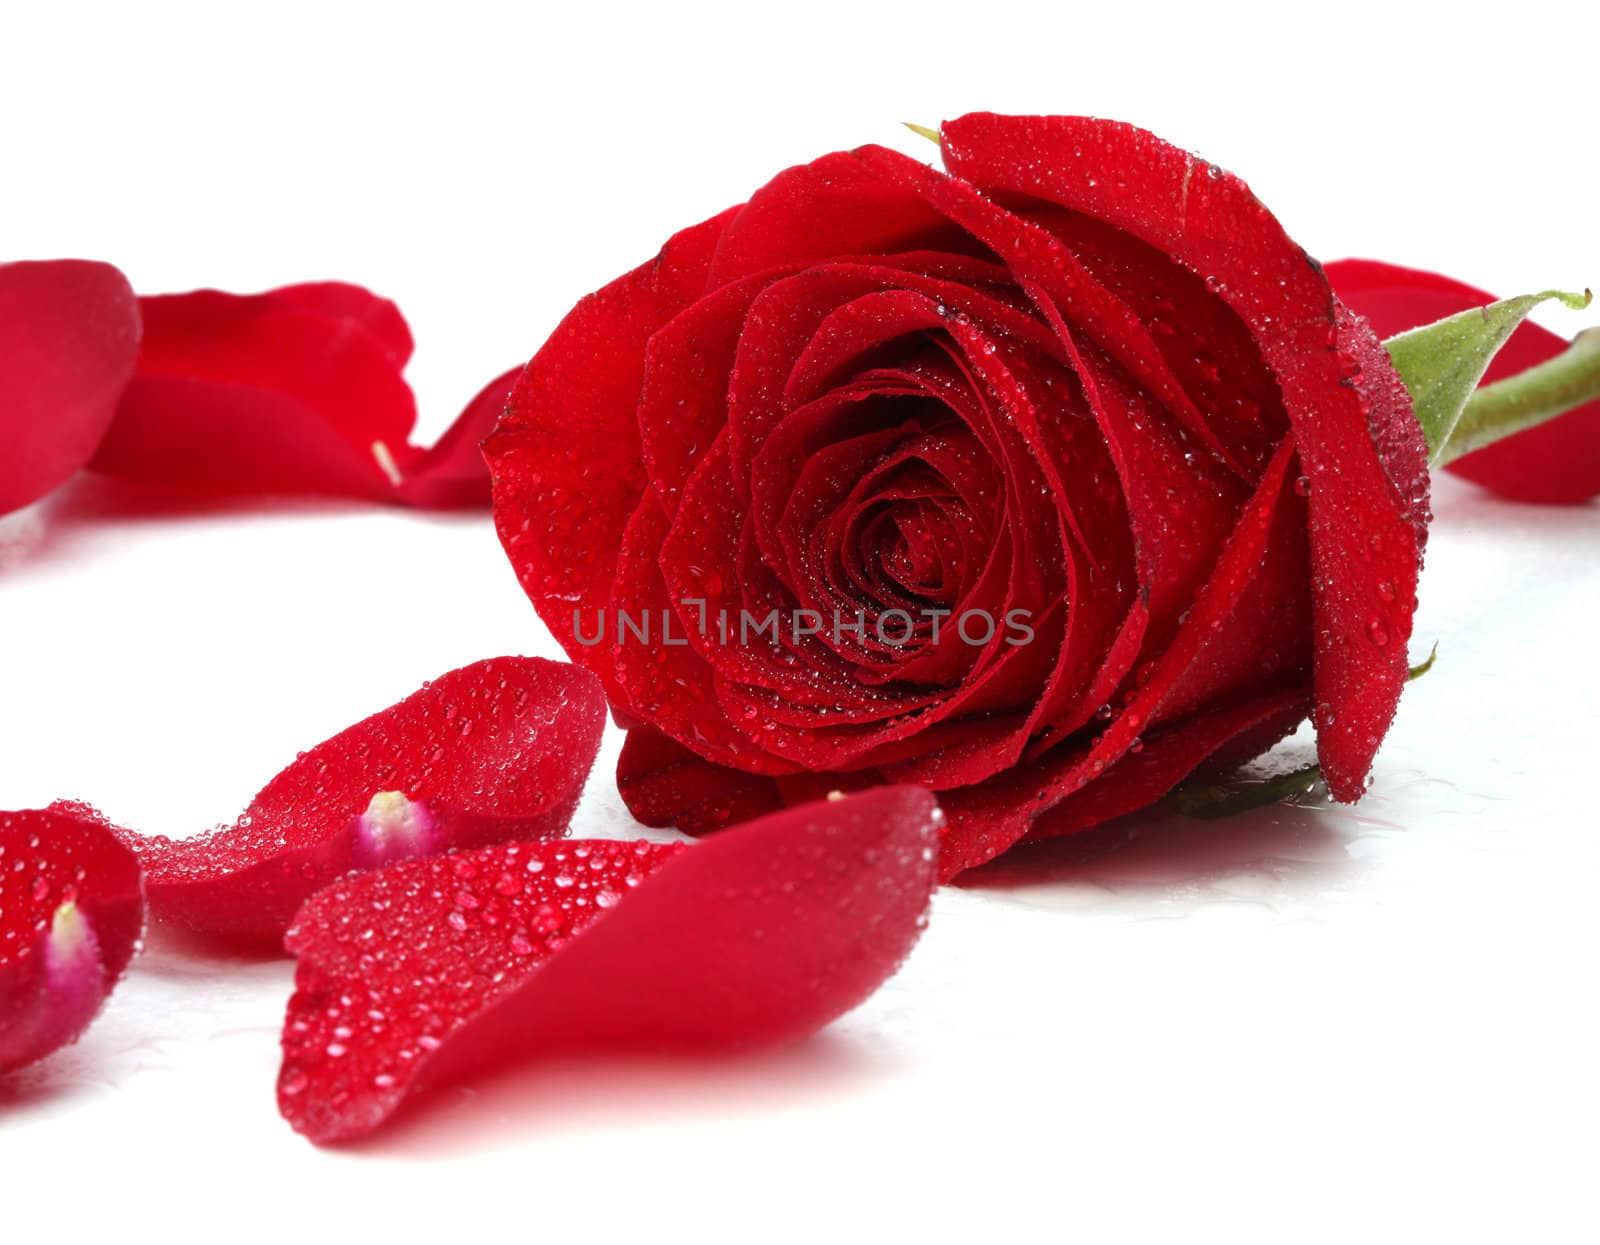 red rose by rudchenko